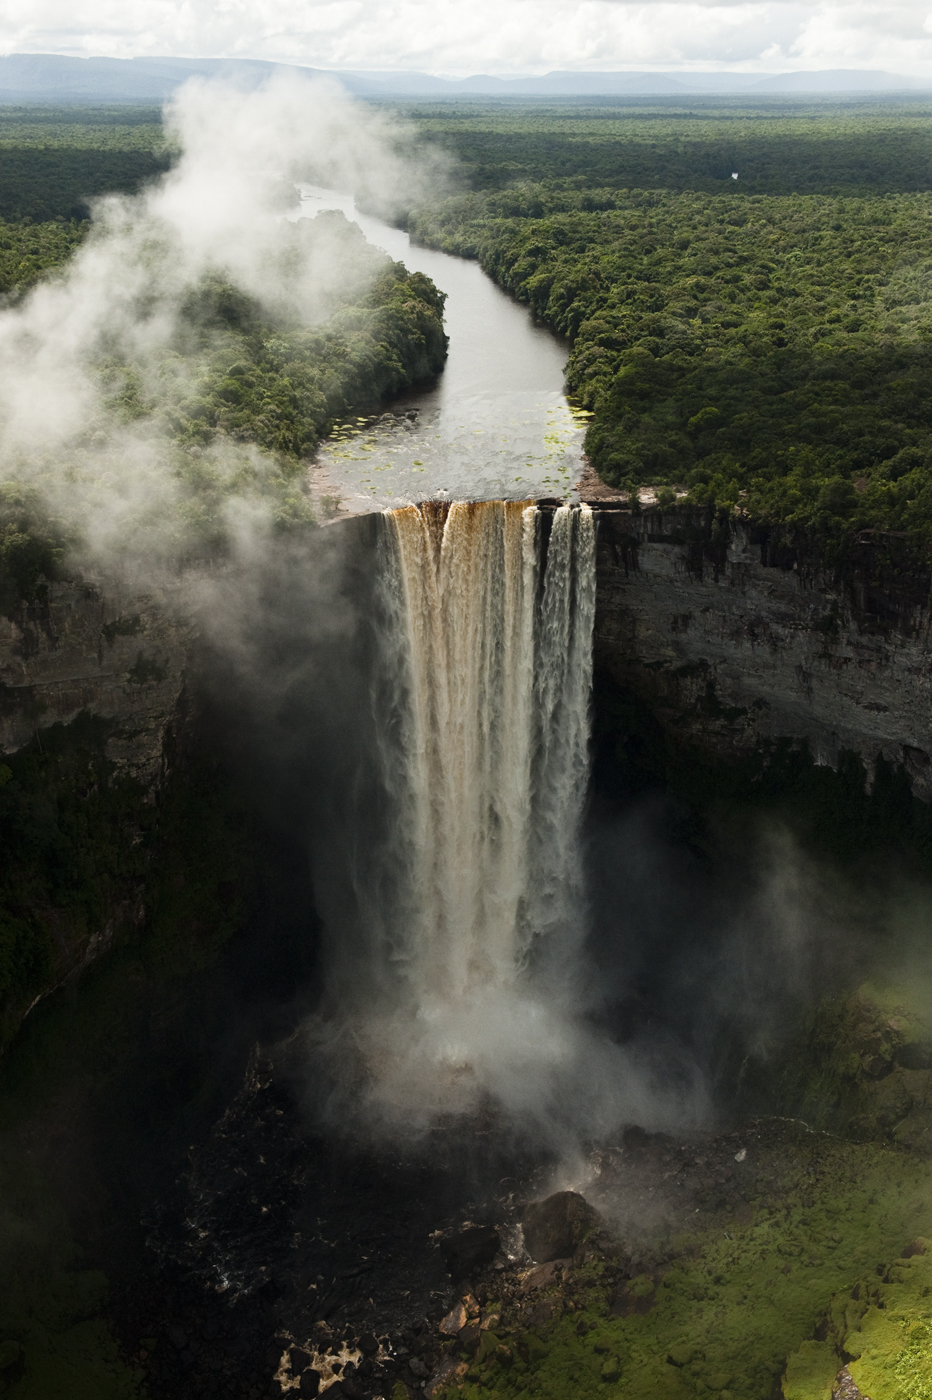 Kaieteur Falls 
226 Meters
Potaro River which runs into the Essequibo River
Kaieteur National Park
Rainforest
GUYANA
South America